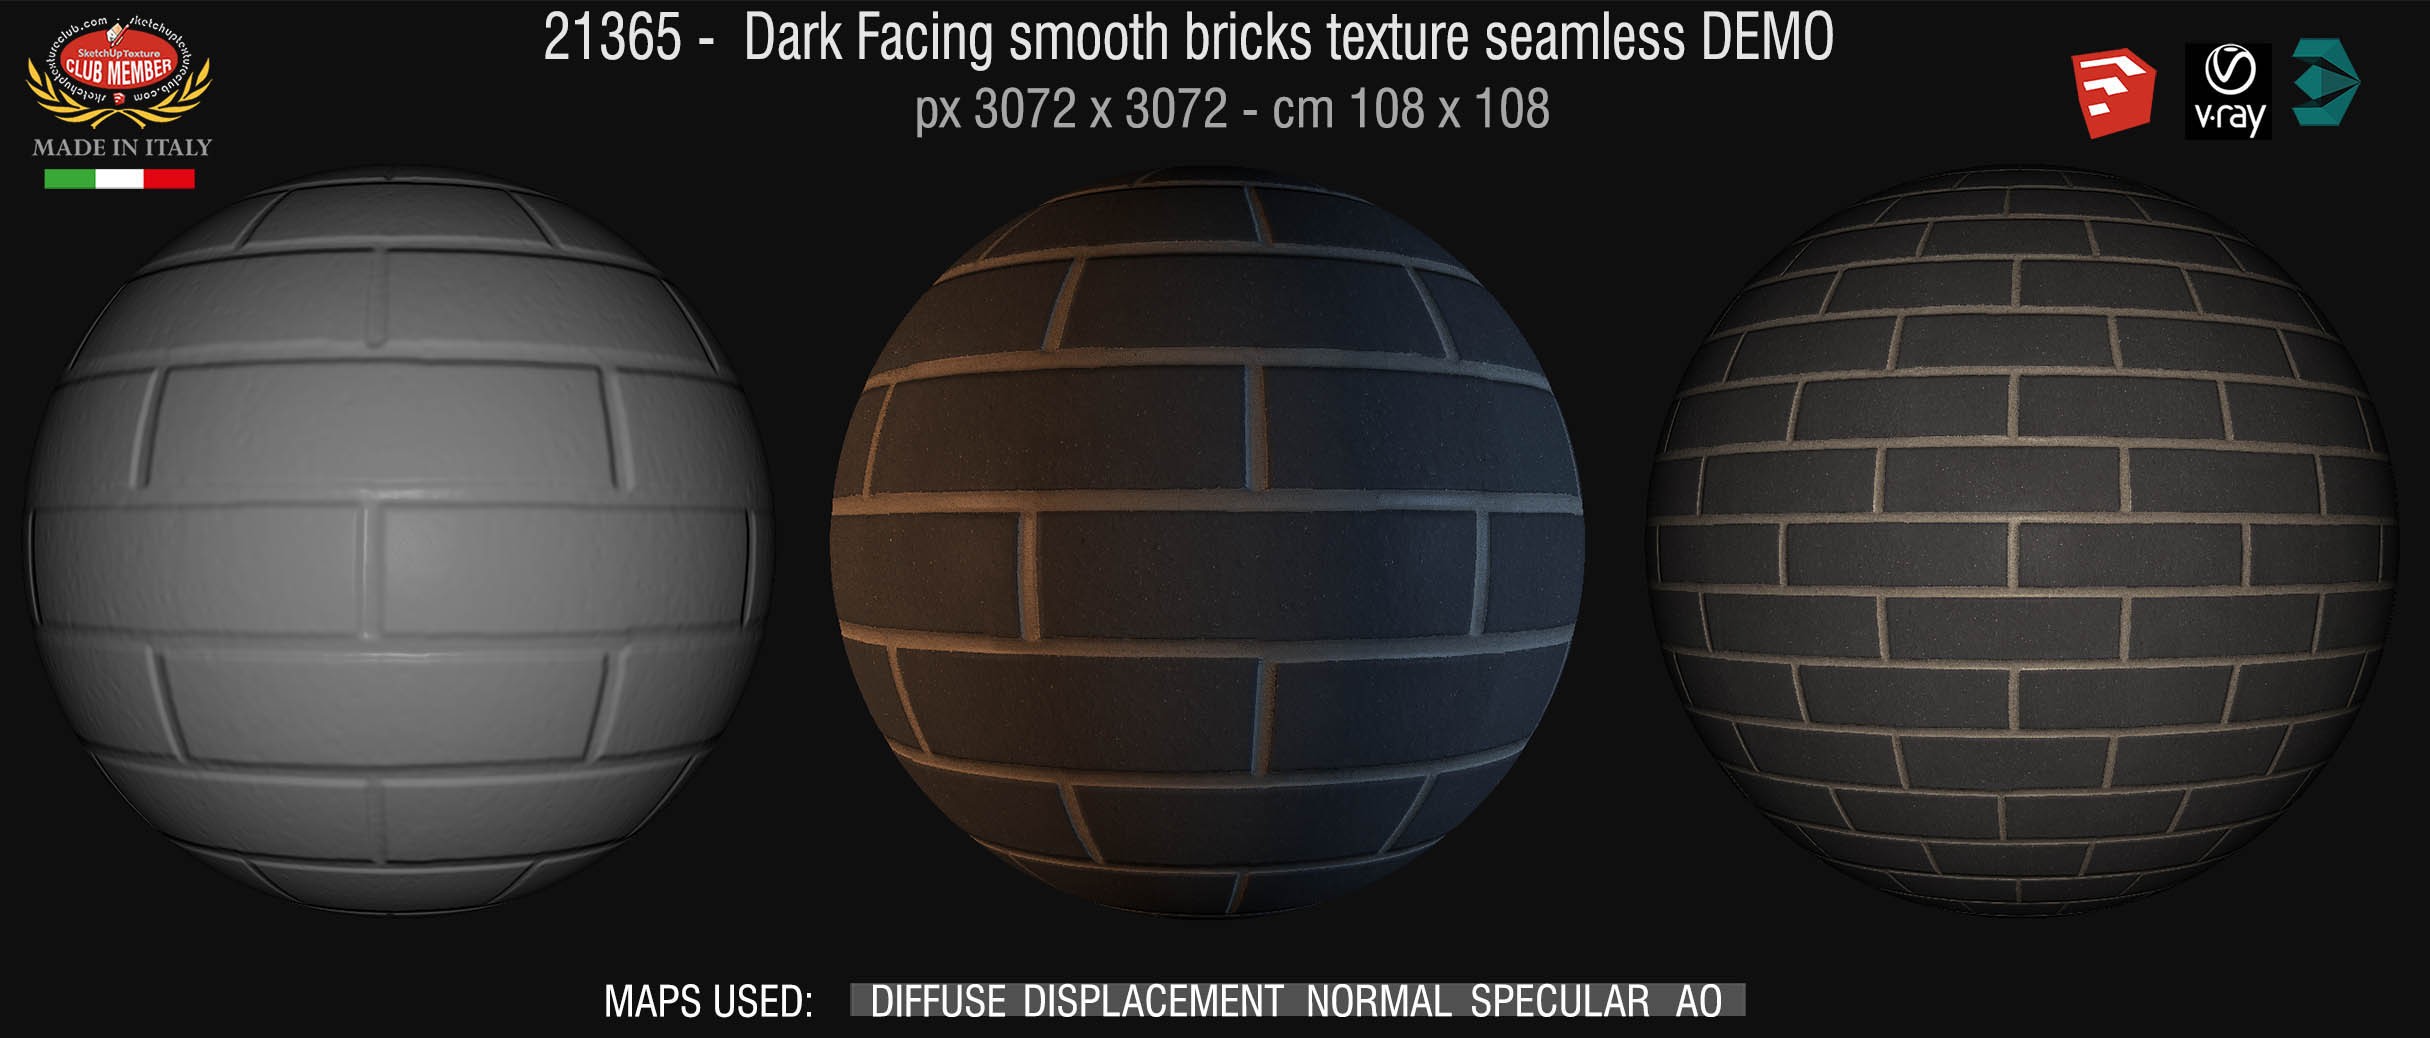 21365 Dark Facing smooth bricks texture seamless + maps DEMO